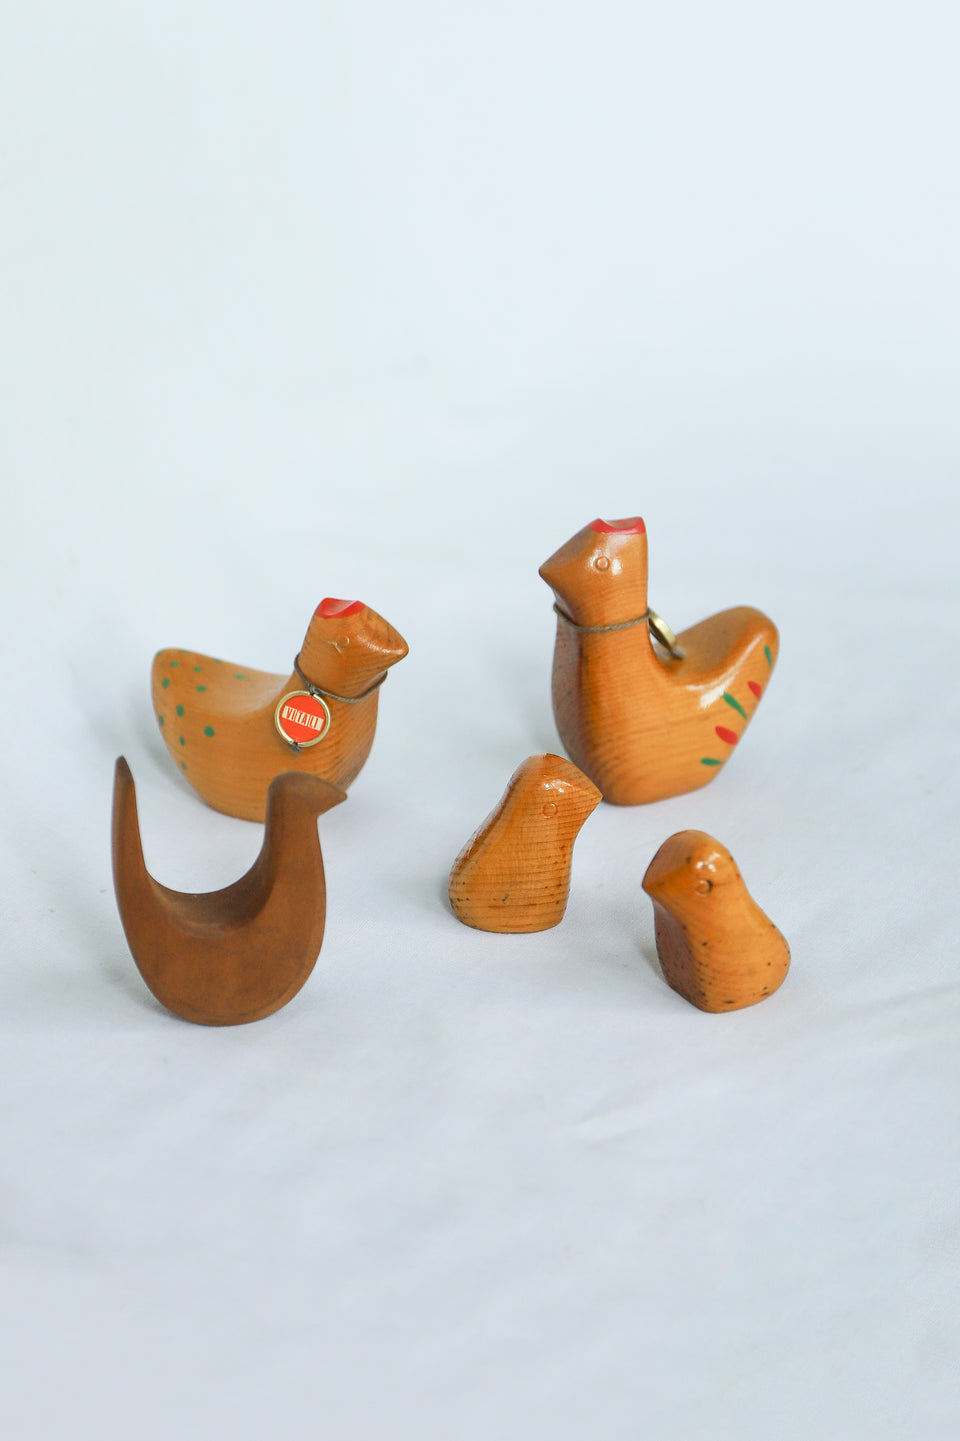 Swiss Vintage Wooden Toy Bird Antonio Vitali/アントニオ・ヴィターリ 木製玩具 ニワトリ ヒヨコ スイス ヴィンテージインテリア